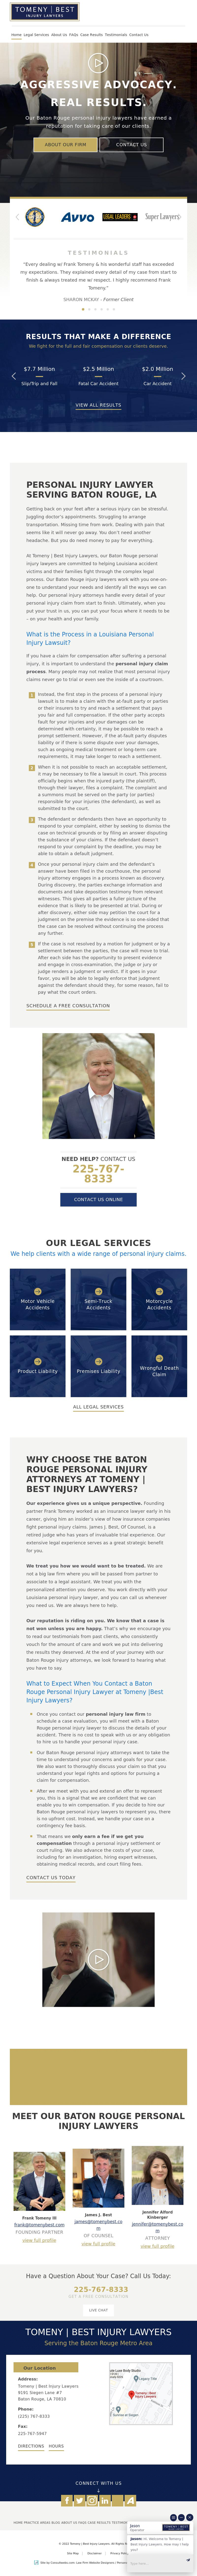 Tomeny Law Firm, APLC - Baton Rouge LA Lawyers